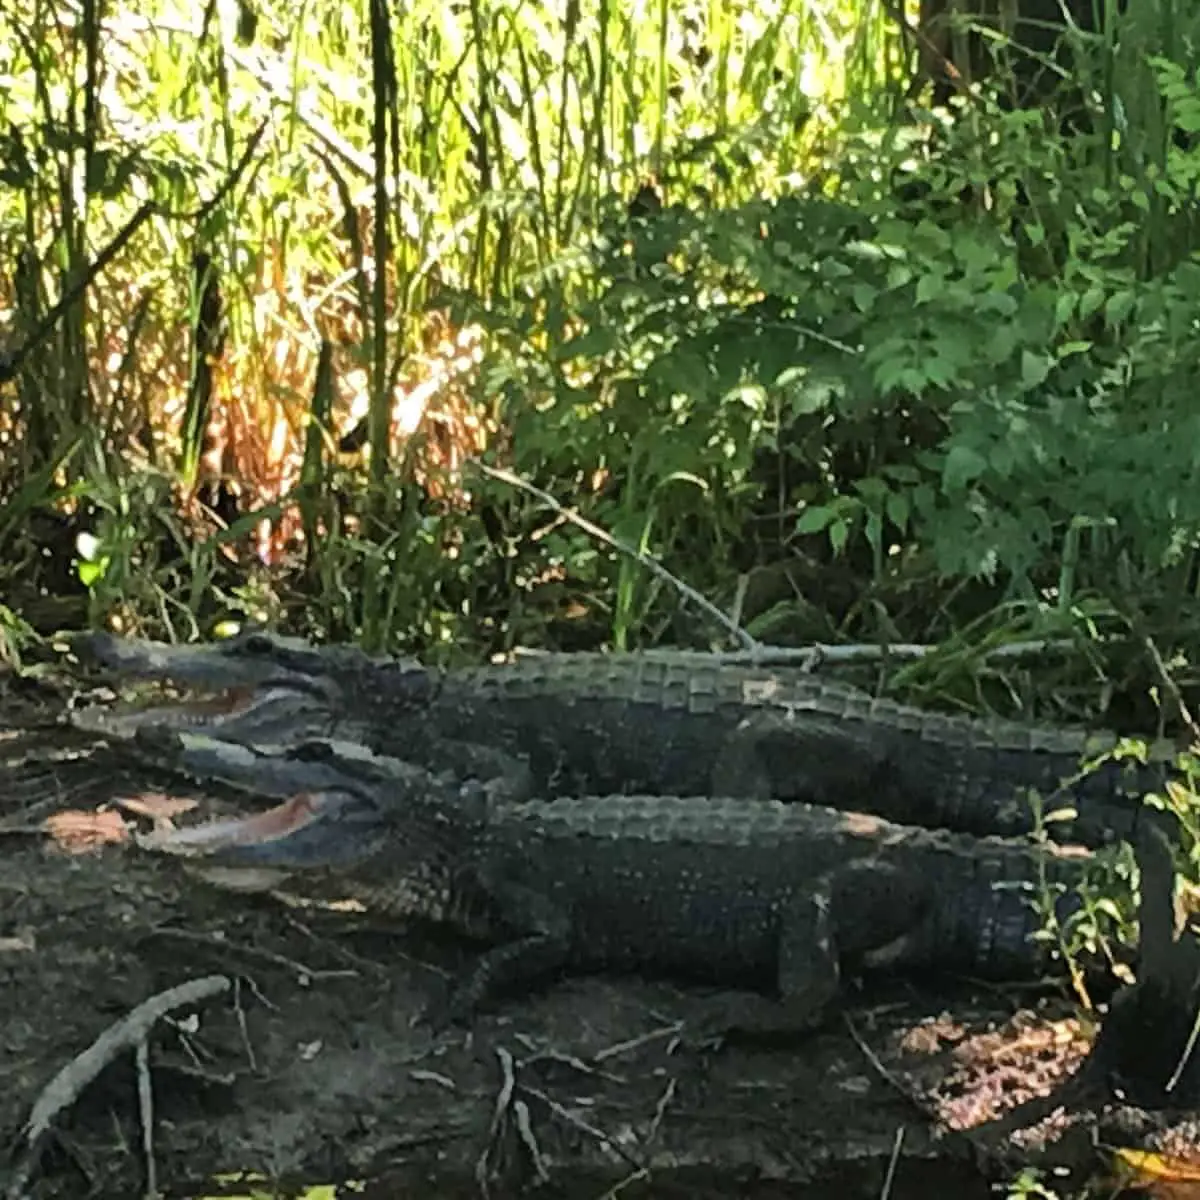 Twin alligators at Okefenokee National Wildlife Refuge on the Florida-Georgia border